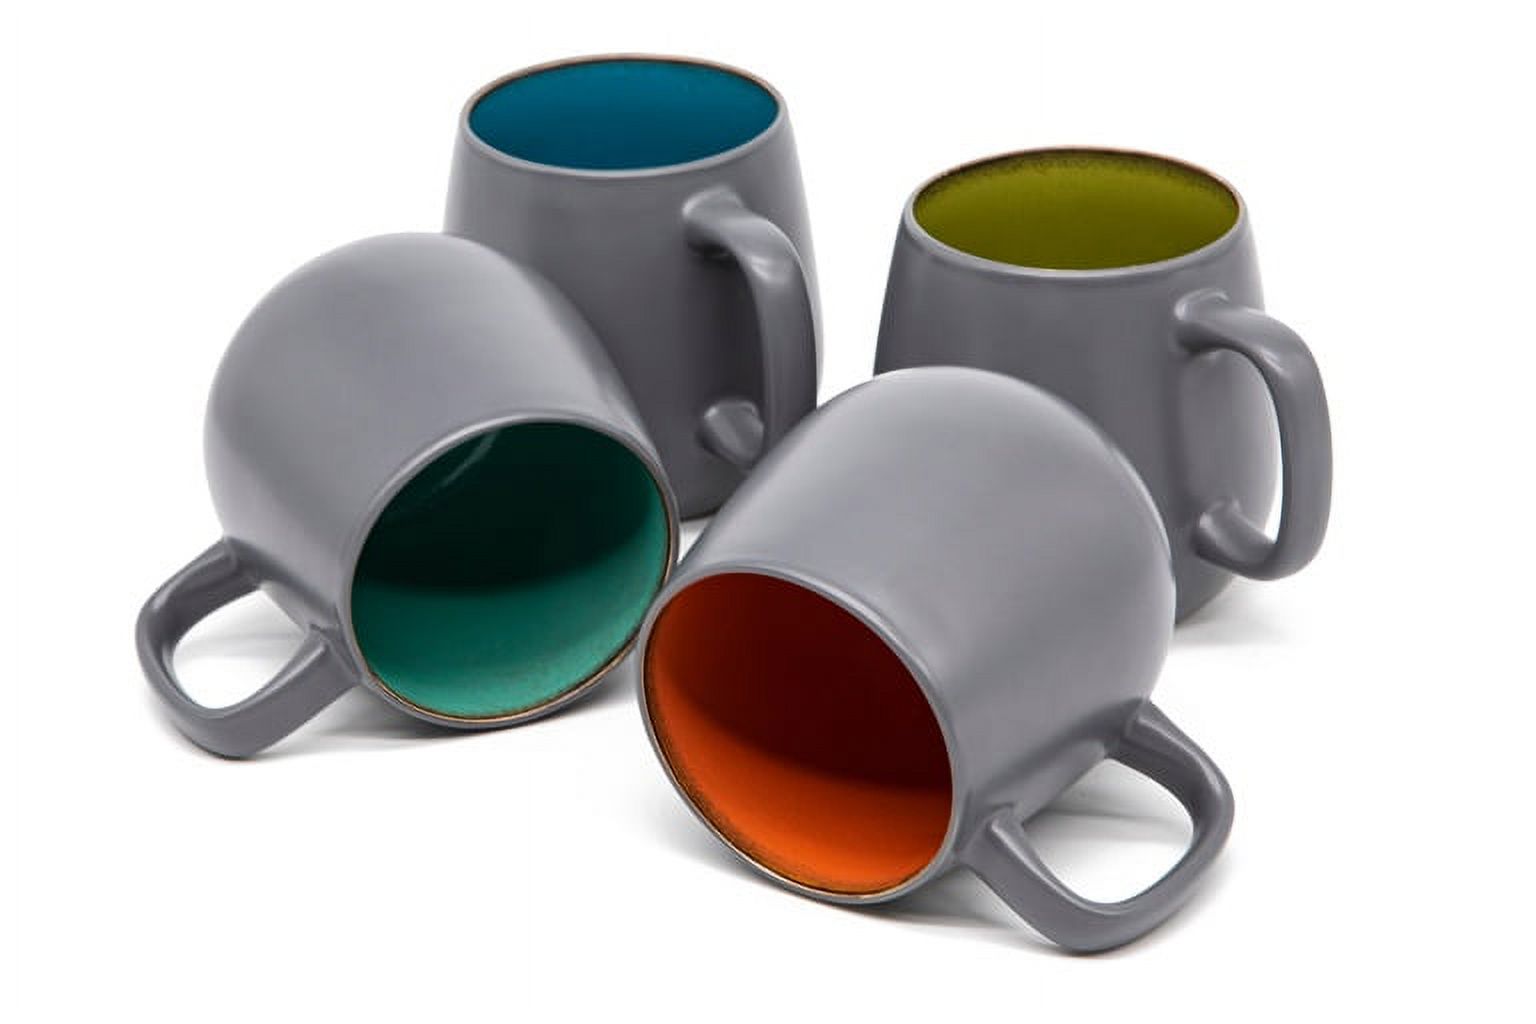 Kook Deco Large Coffee Mugs Set of 4, 21 Oz Multicolor Ceramic Mugs Drinkware - image 1 of 5